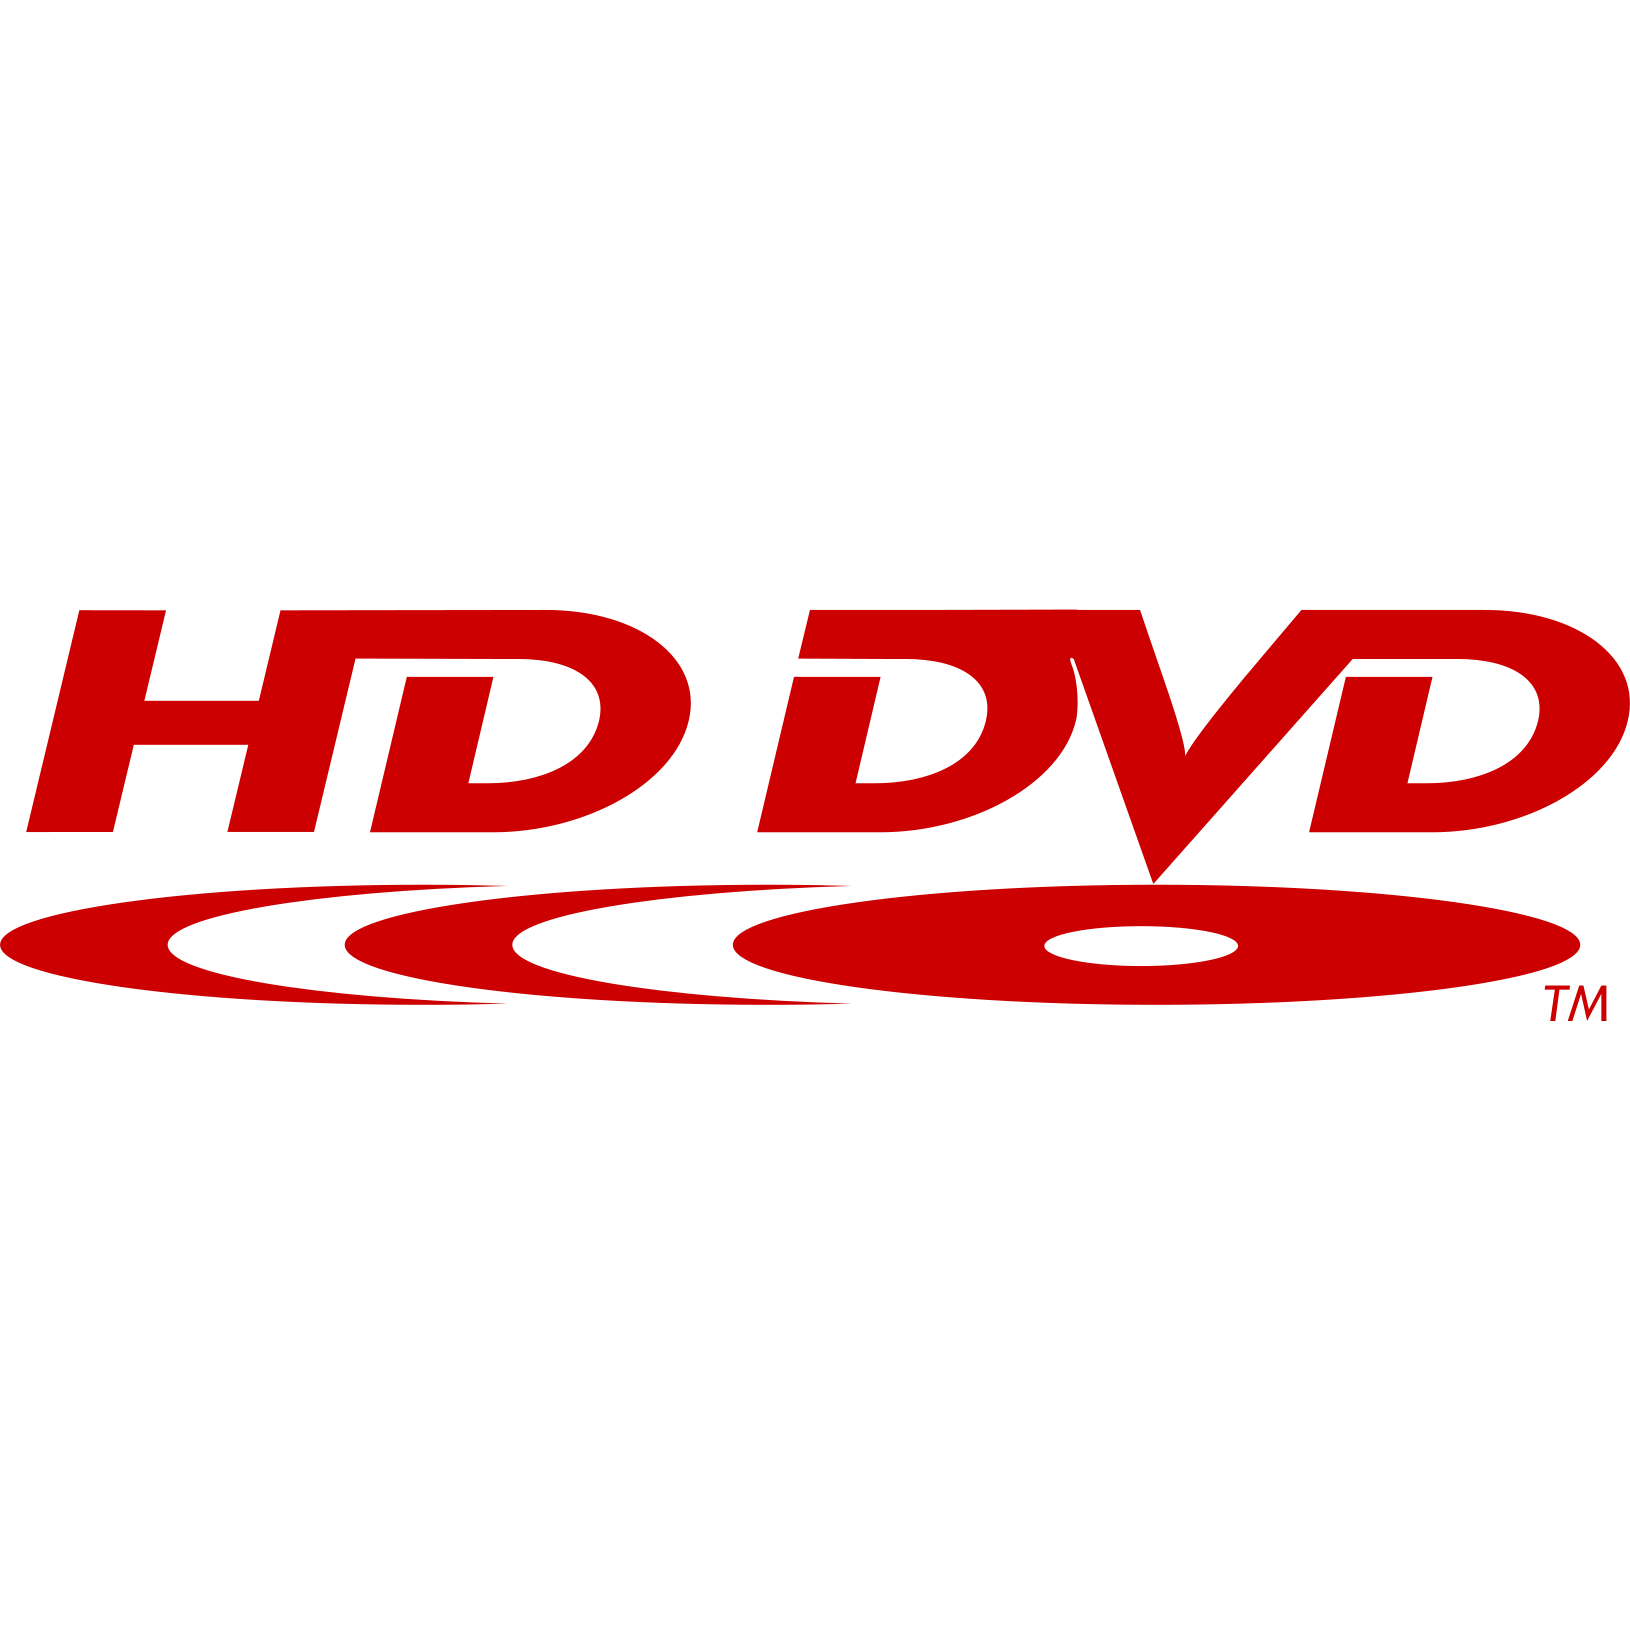 DVD Logo